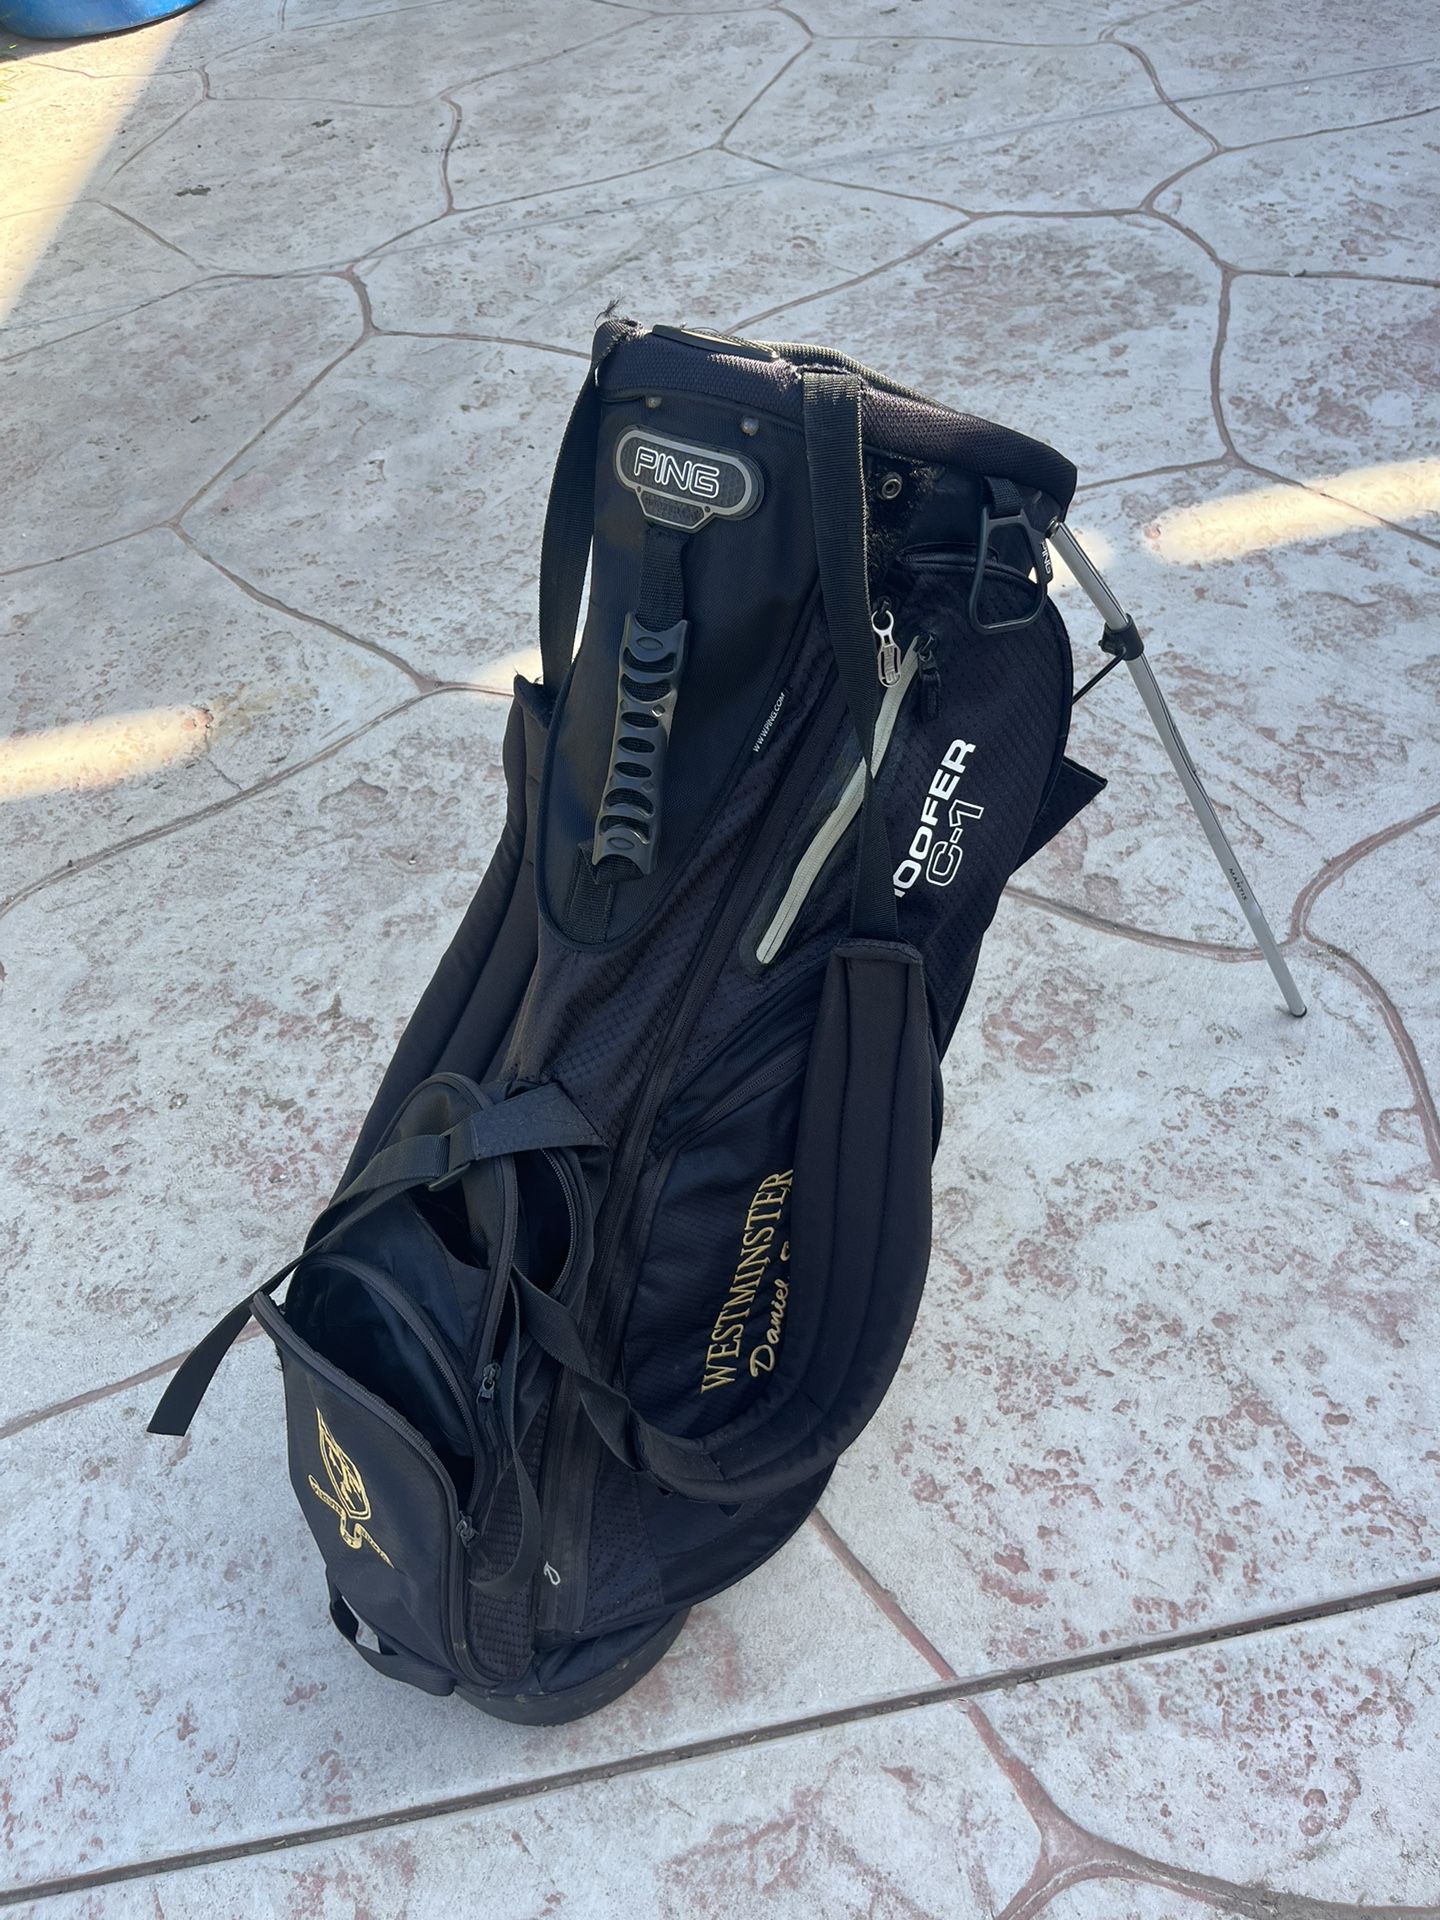 Ping Golf Bag Good Condition 